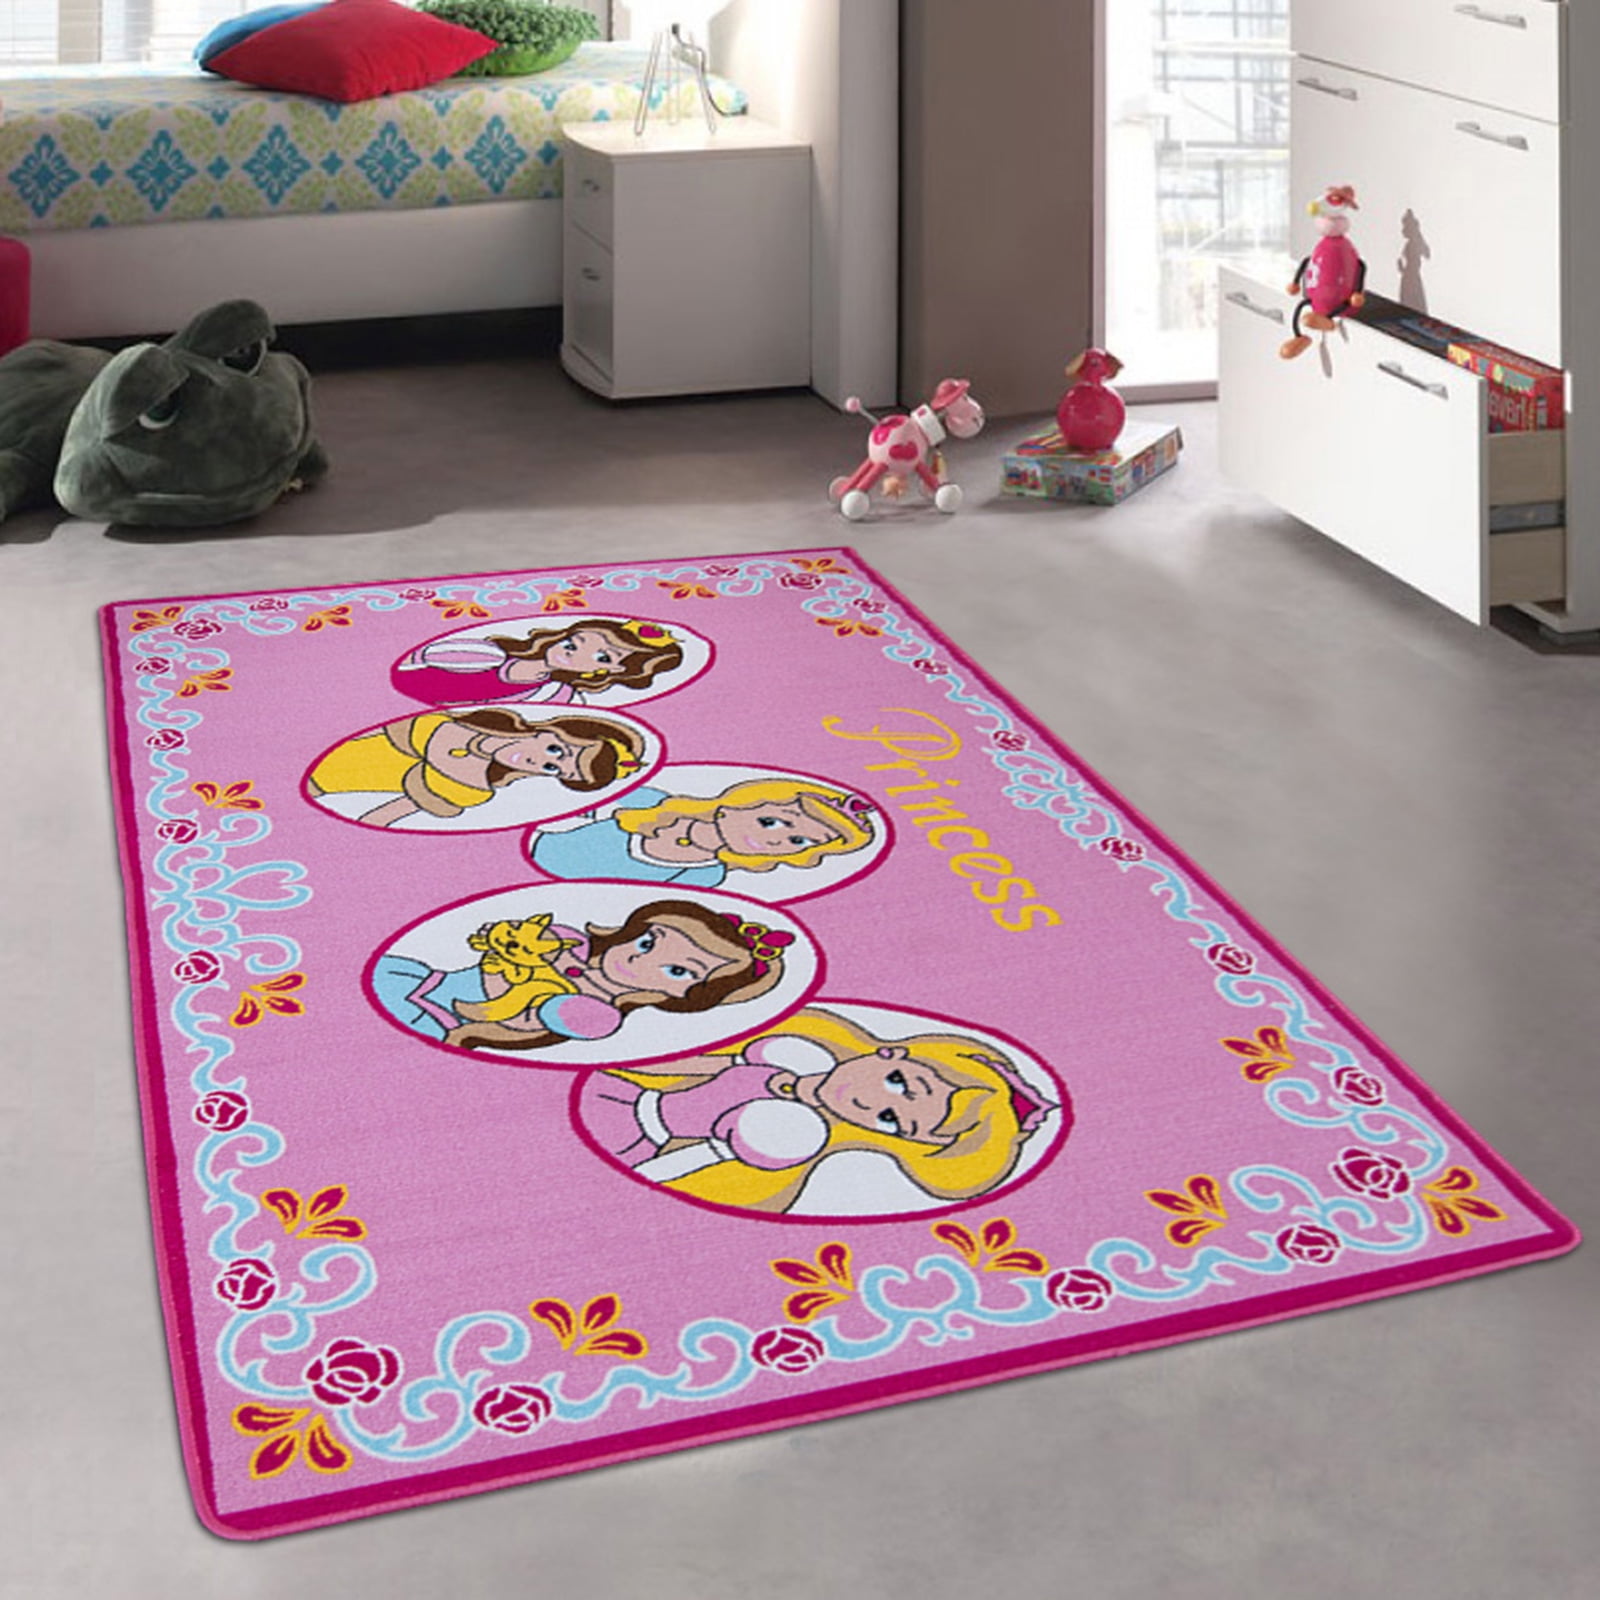 AllStar Pink Rug Kids / Baby Room Area Rug. Princess ...